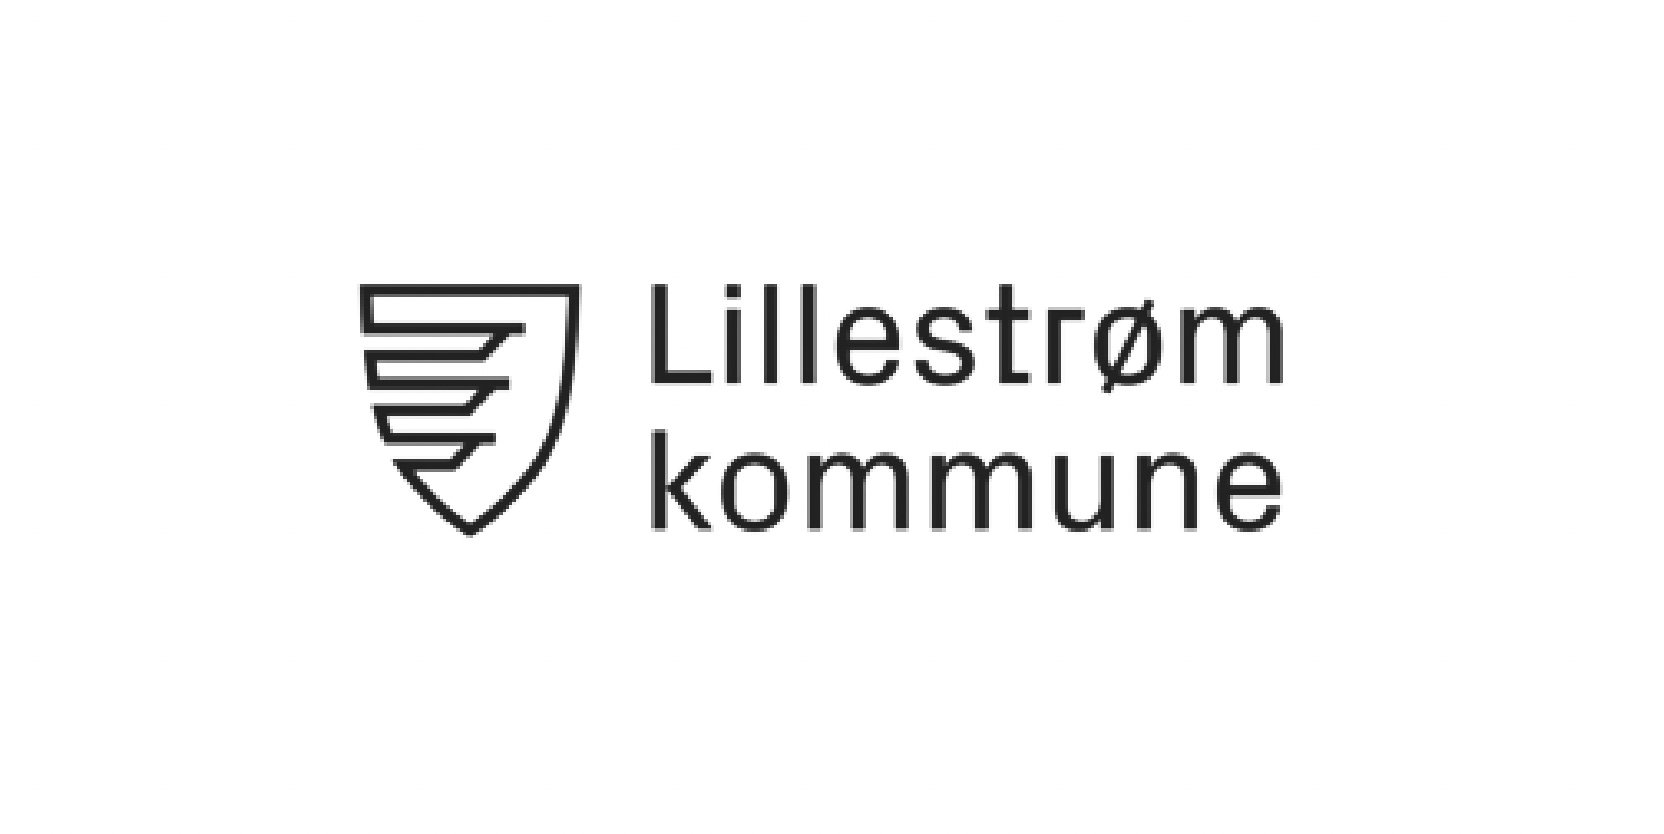 Lillestrøm Kommune_edited